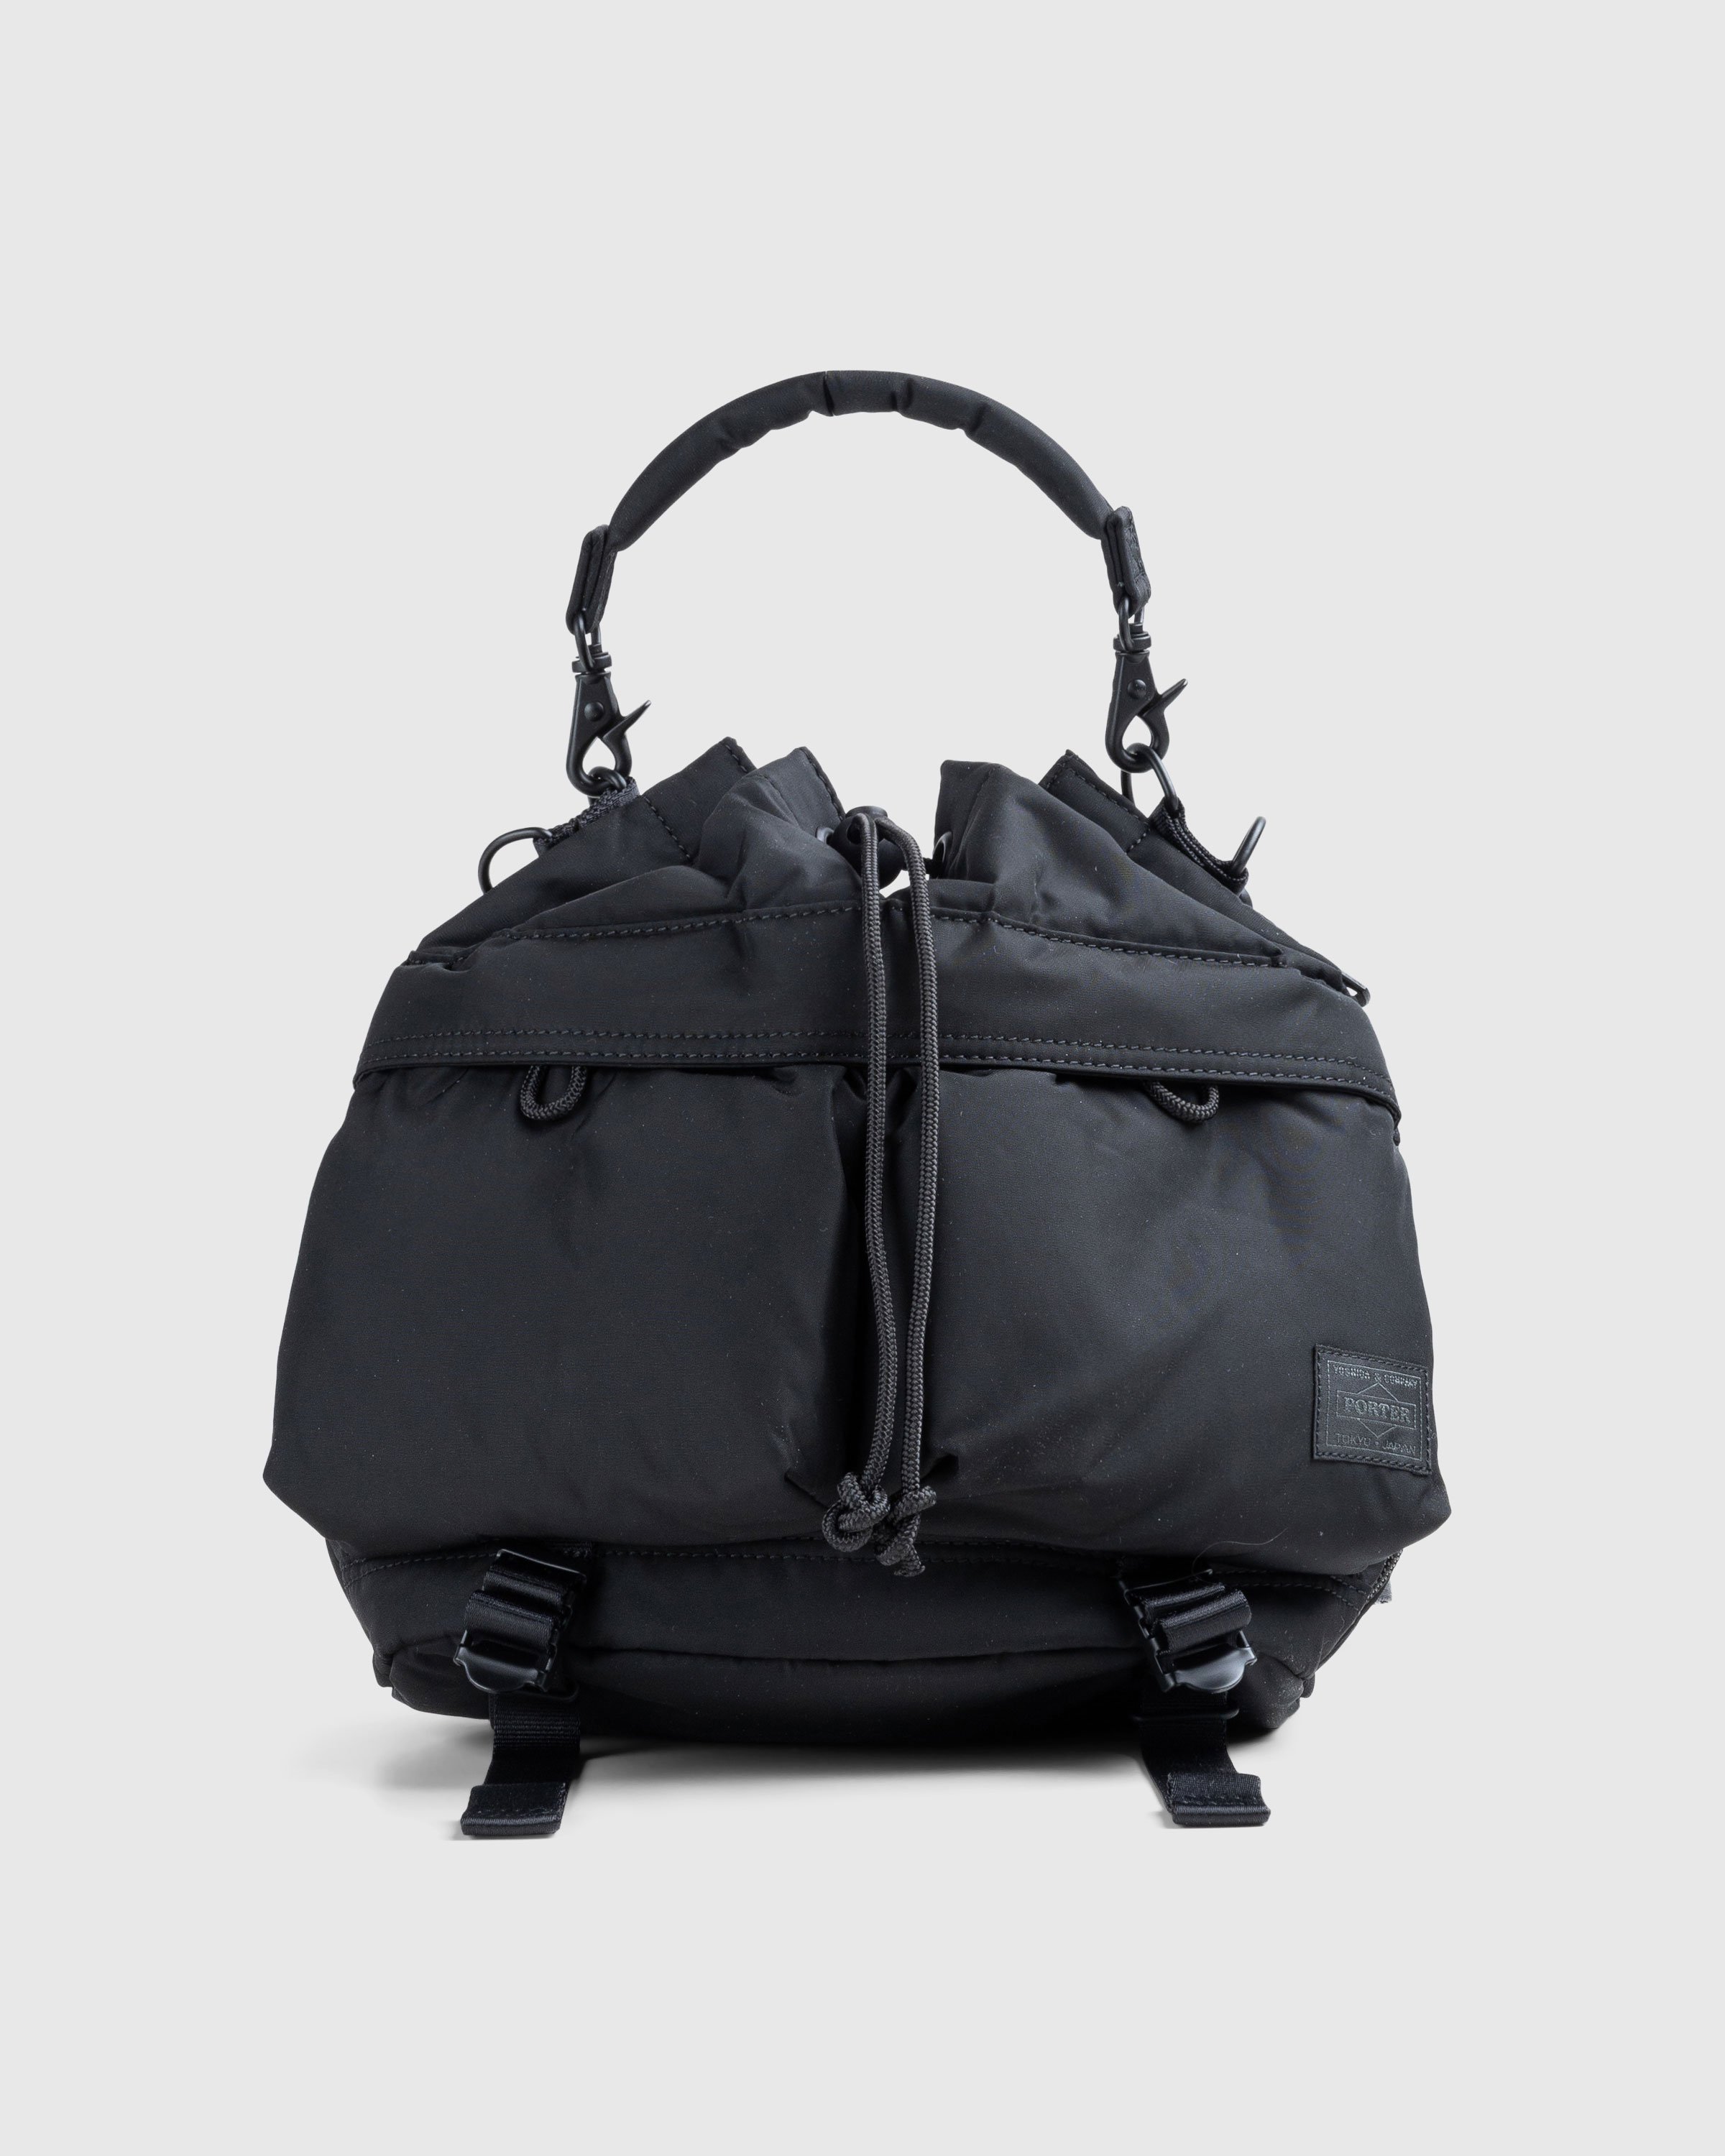 Porter-Yoshida & Co. – Senses Tool Bag Black | Highsnobiety Shop